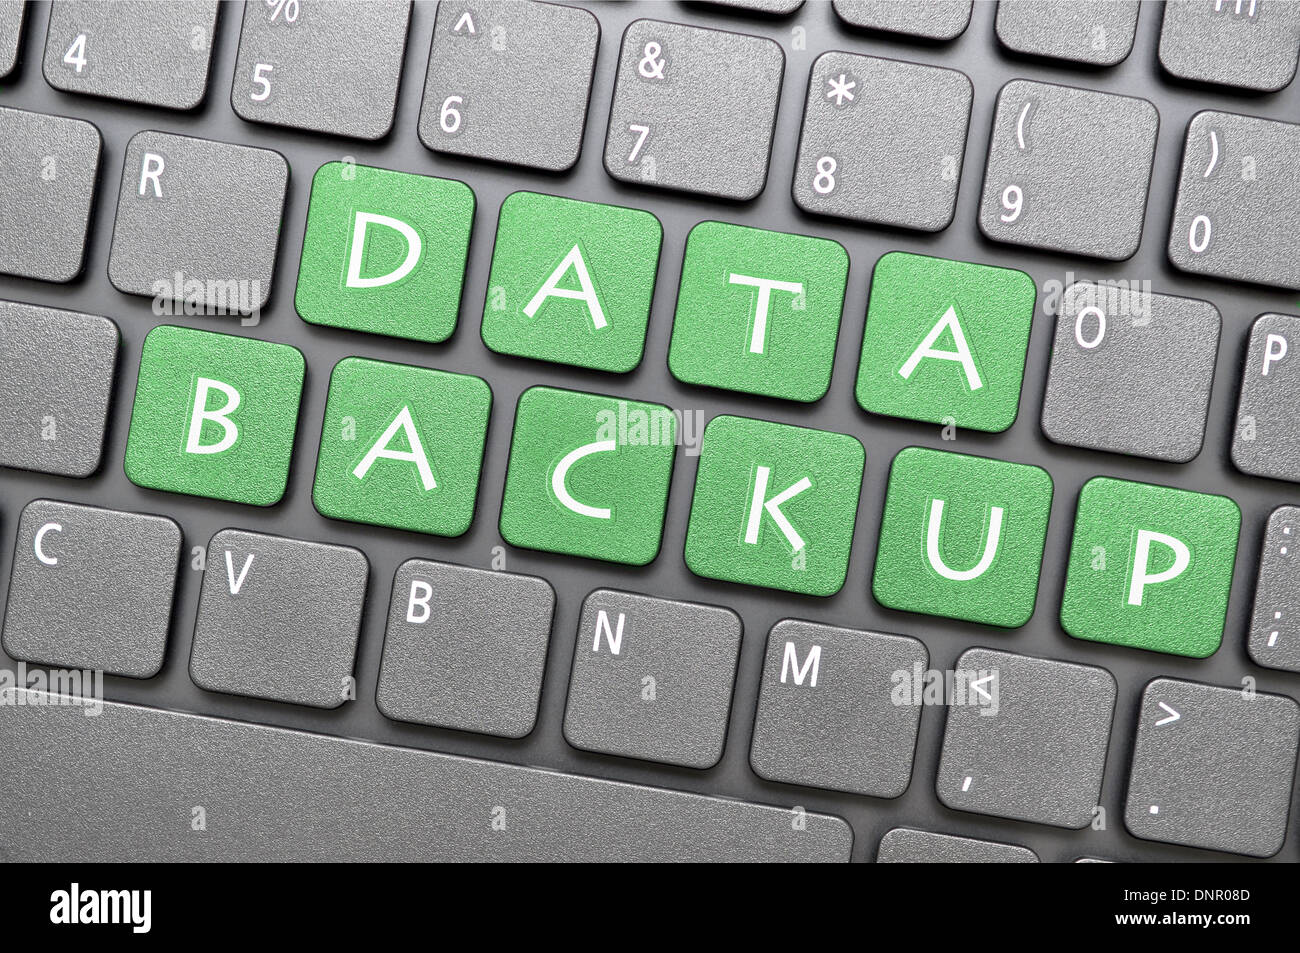 Data backup on keyboard Stock Photo